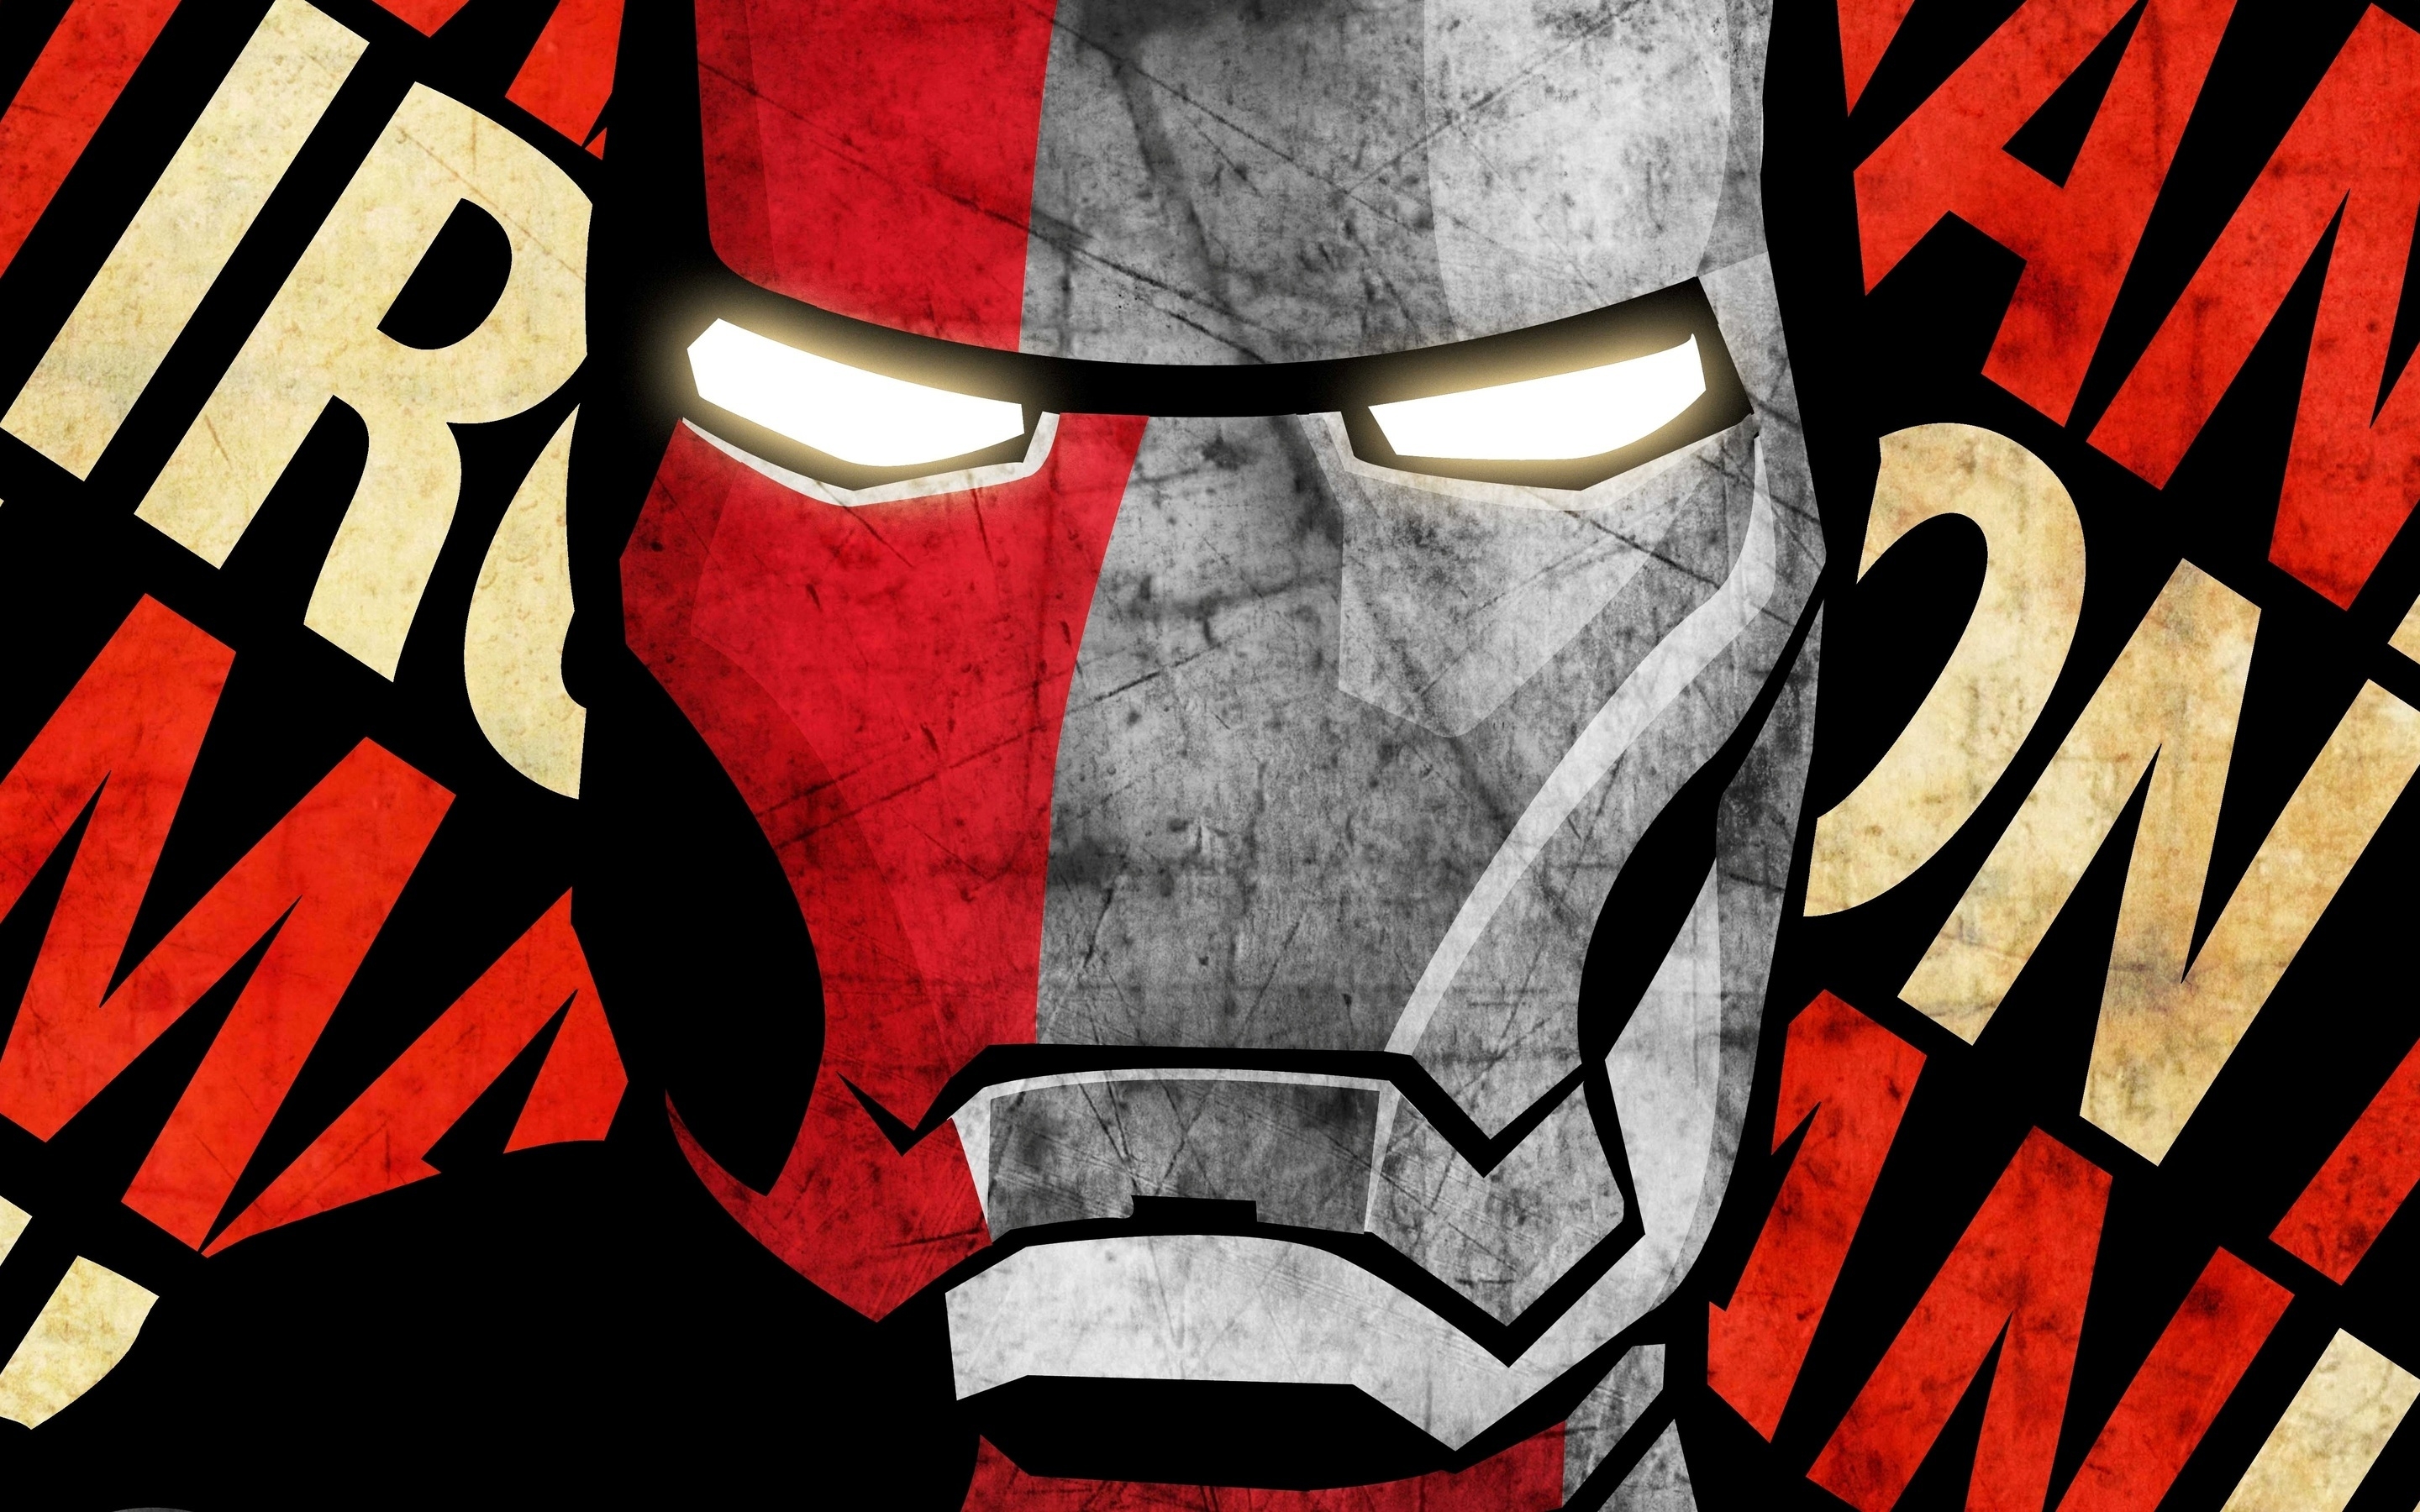 Iron Man Mask for 2880 x 1800 Retina Display resolution